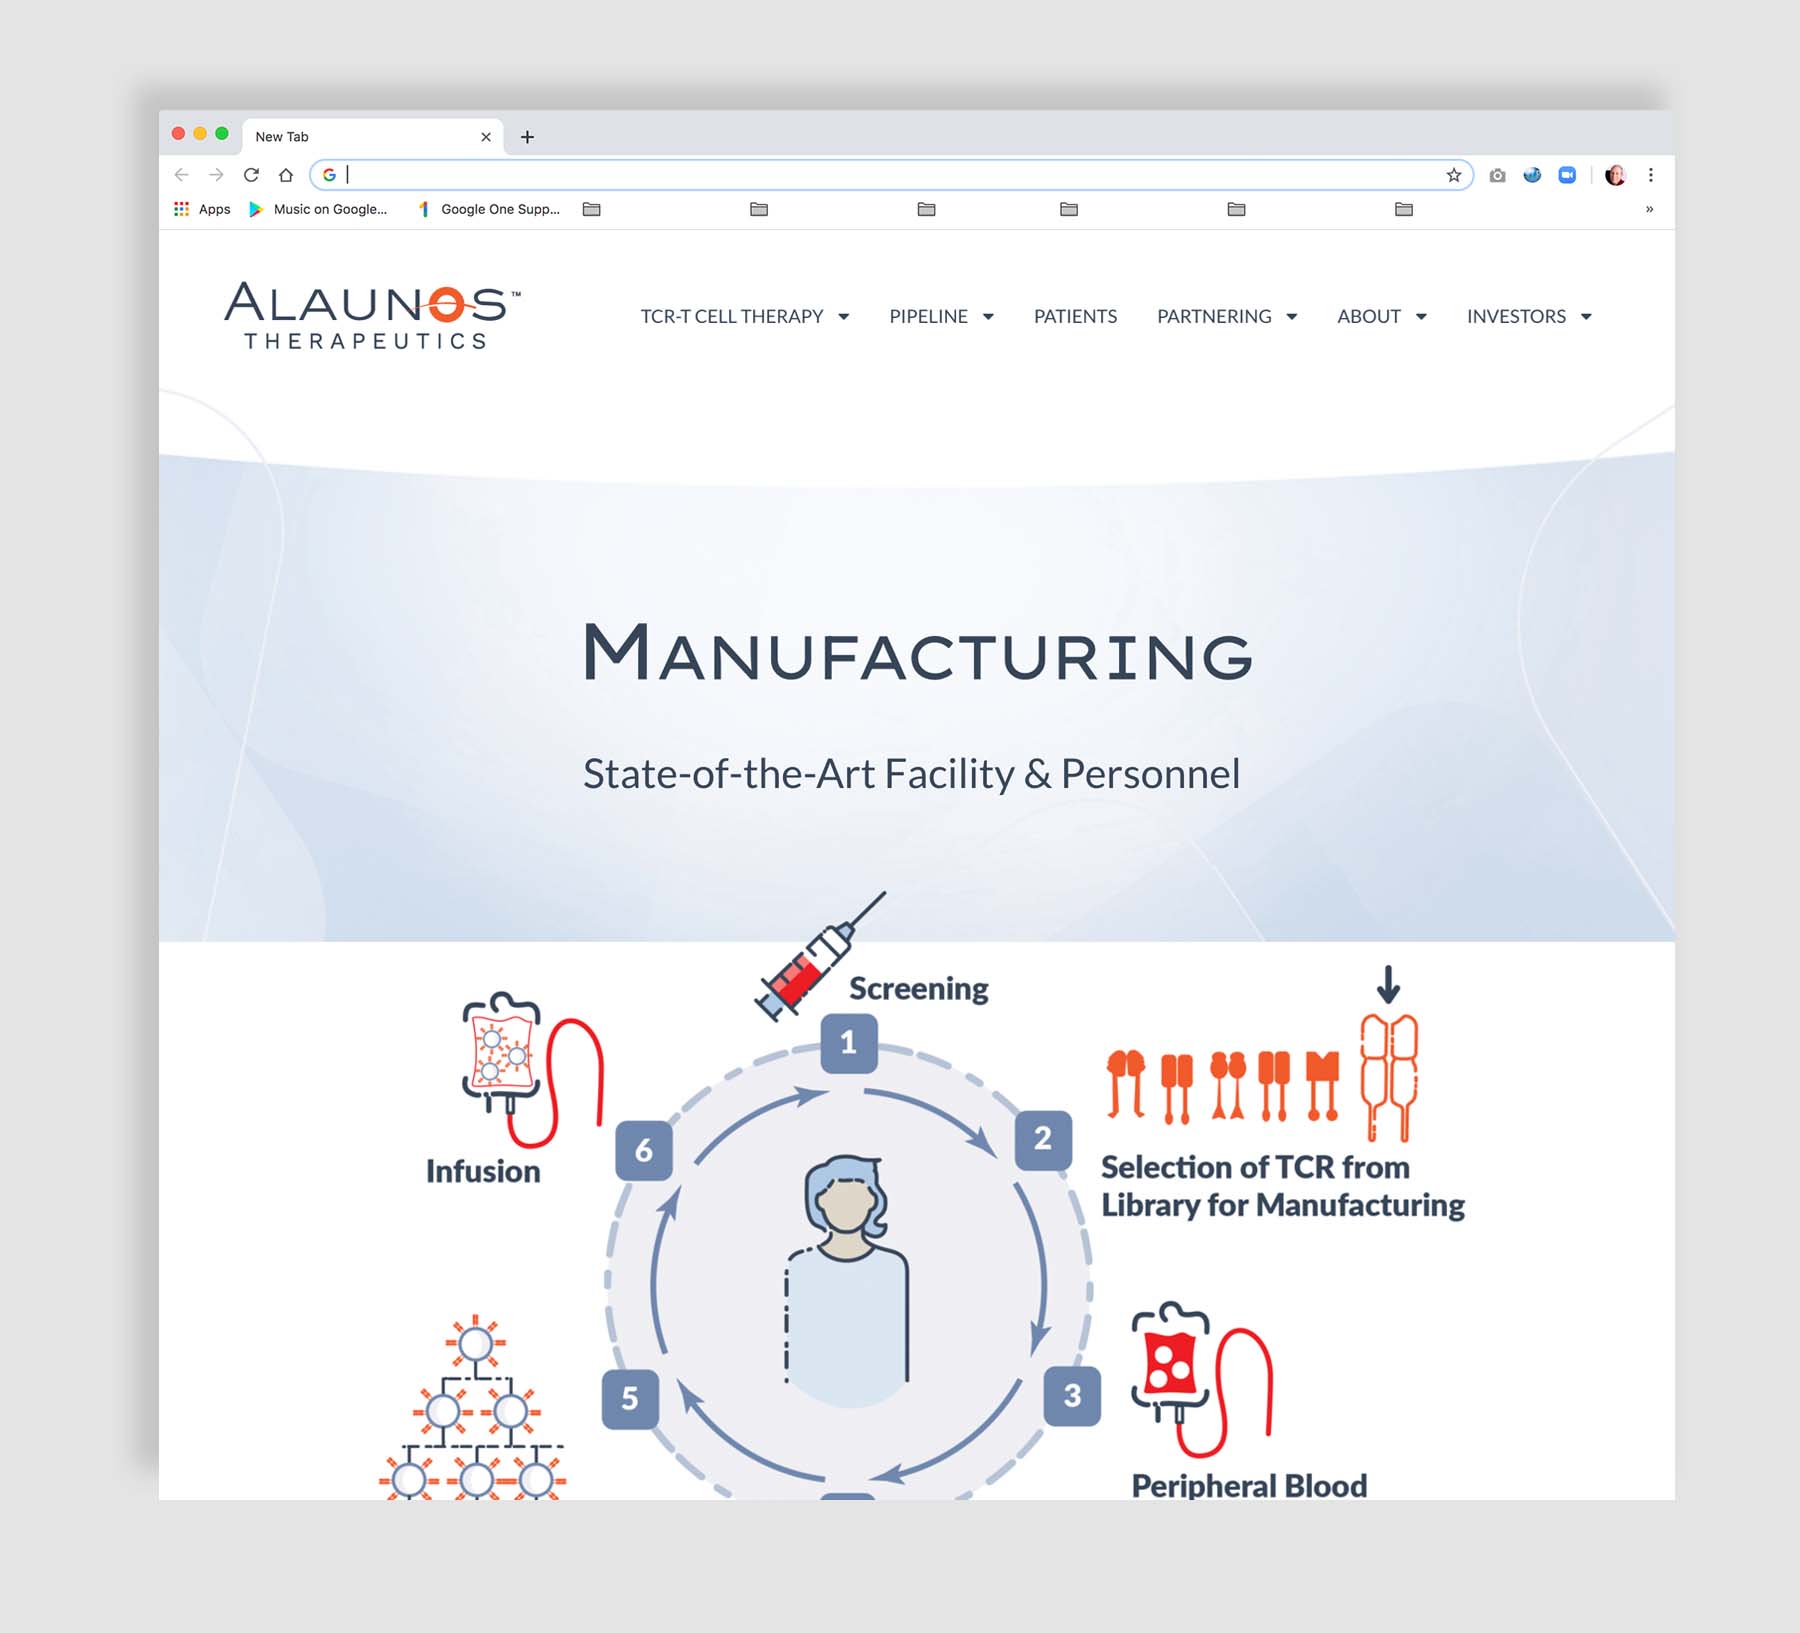 Alaunos website interior page design